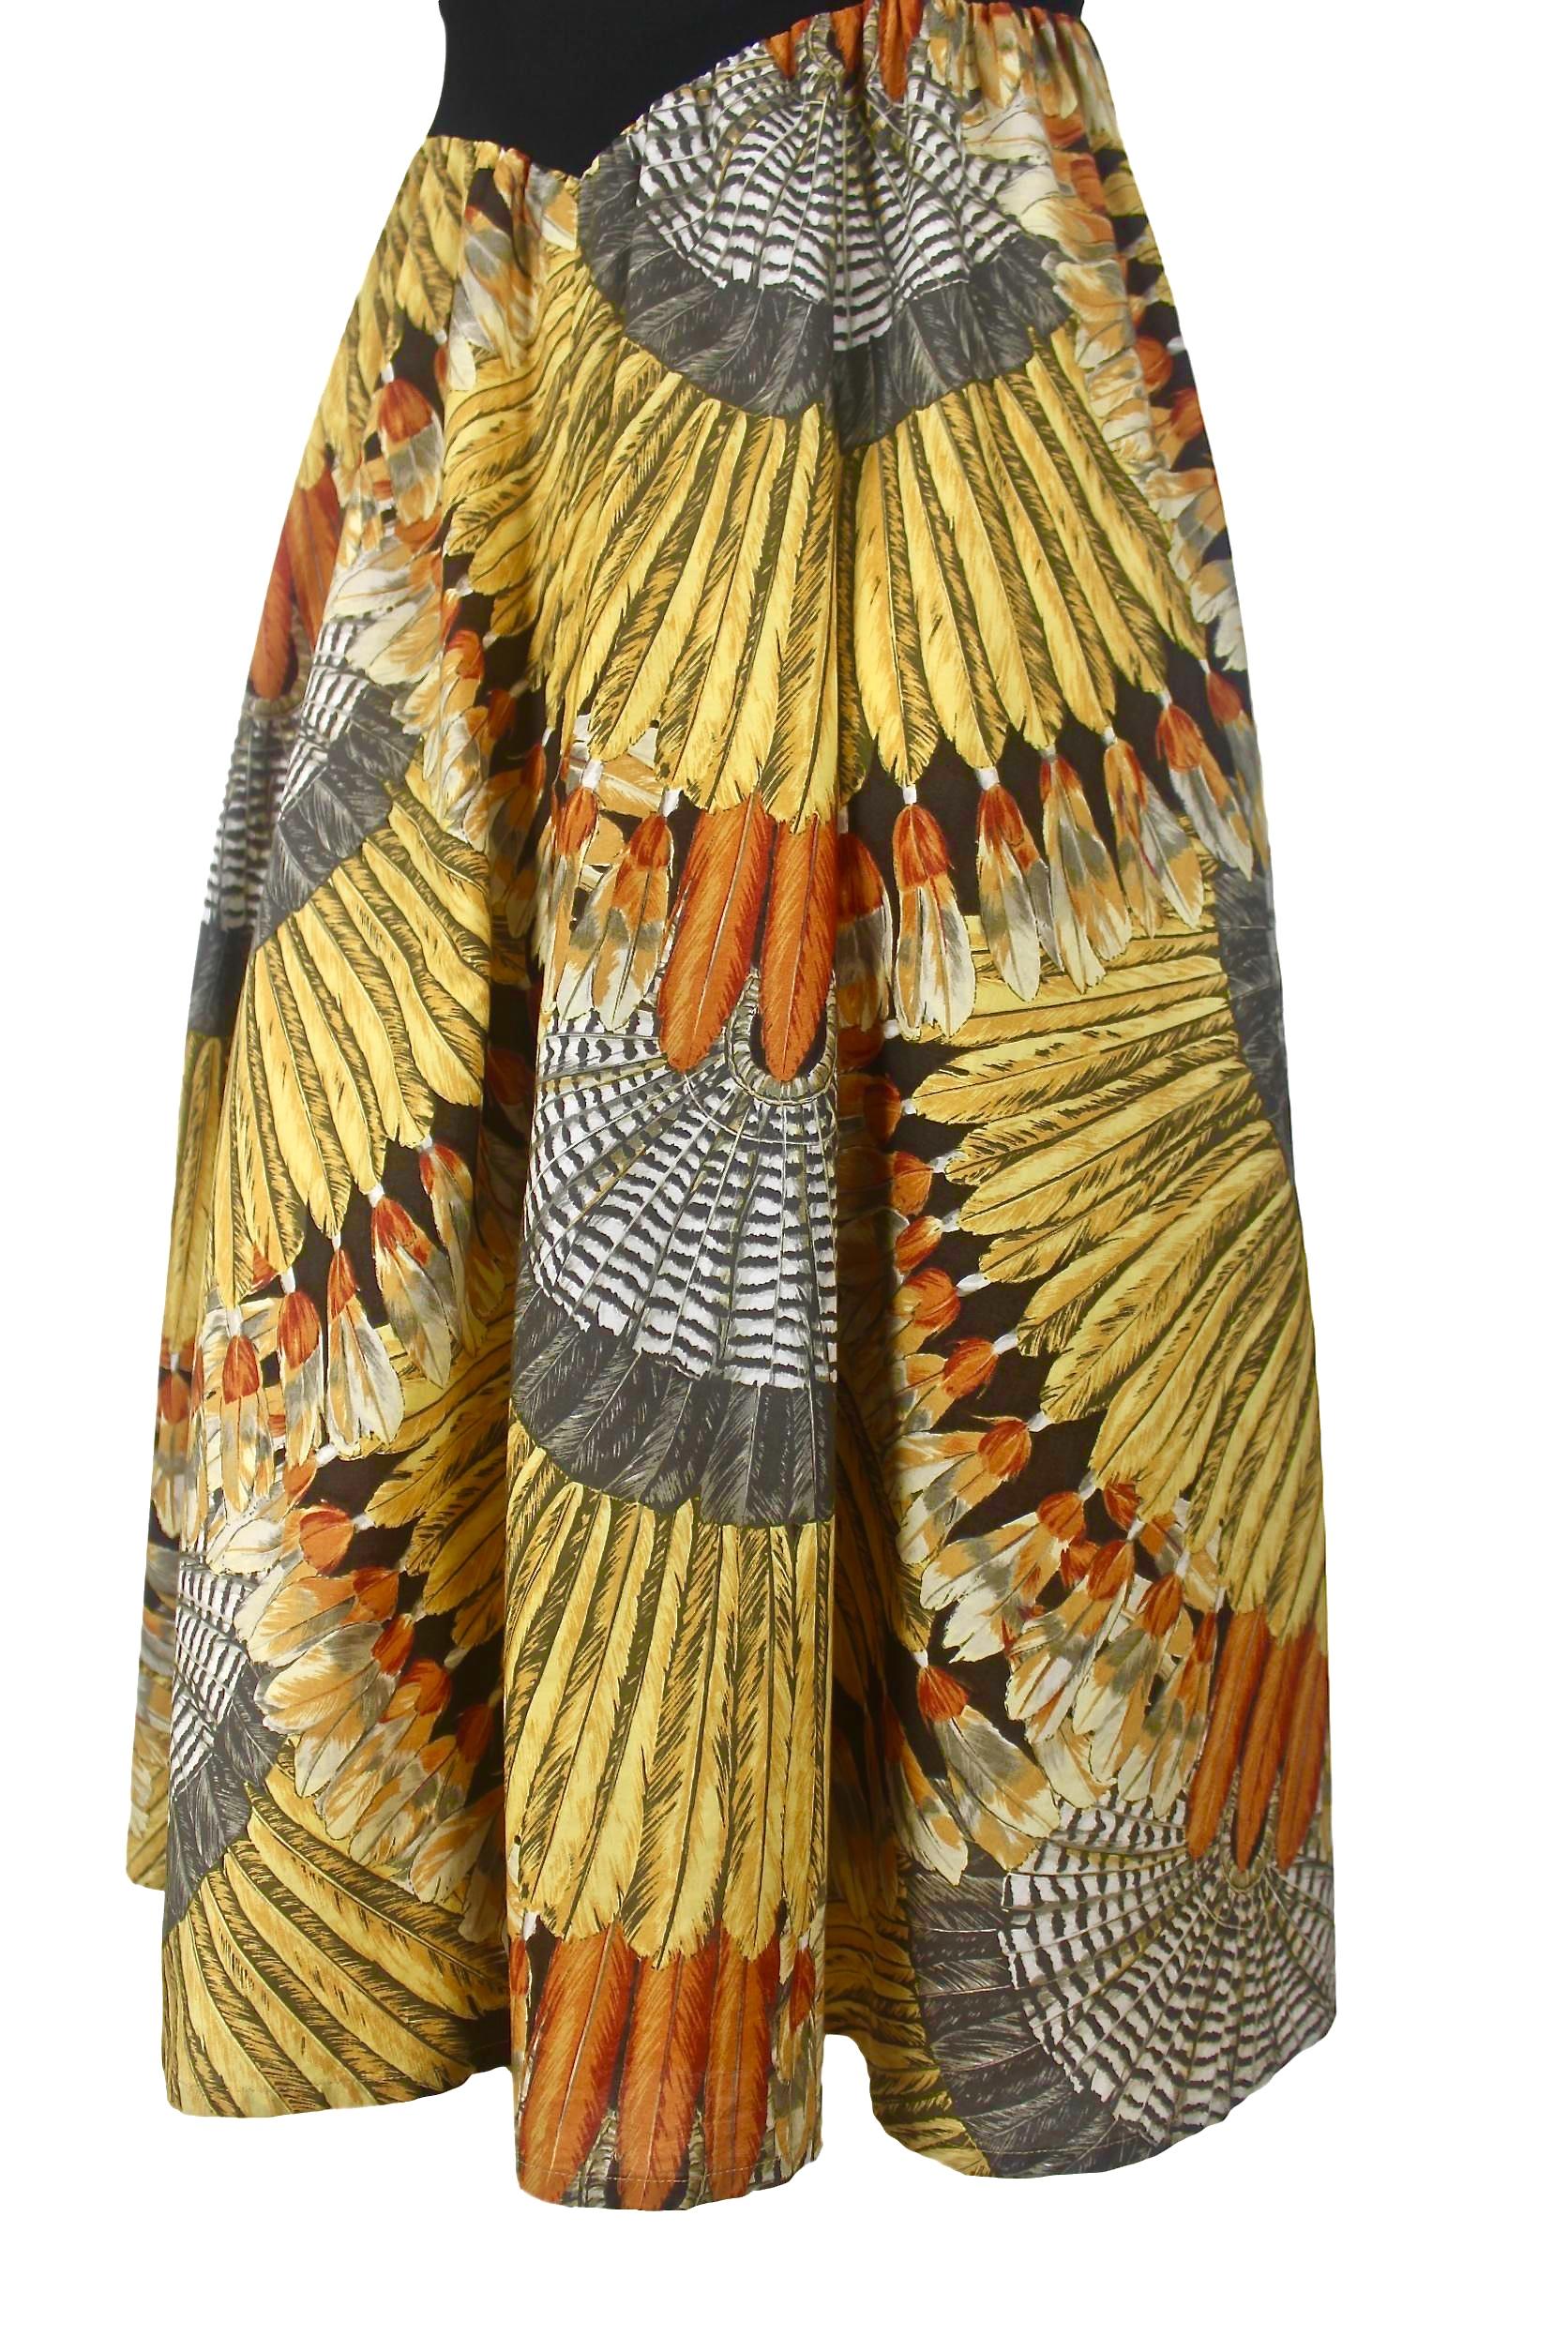 Sorelle Fontana Feather Print Dress For Sale 3